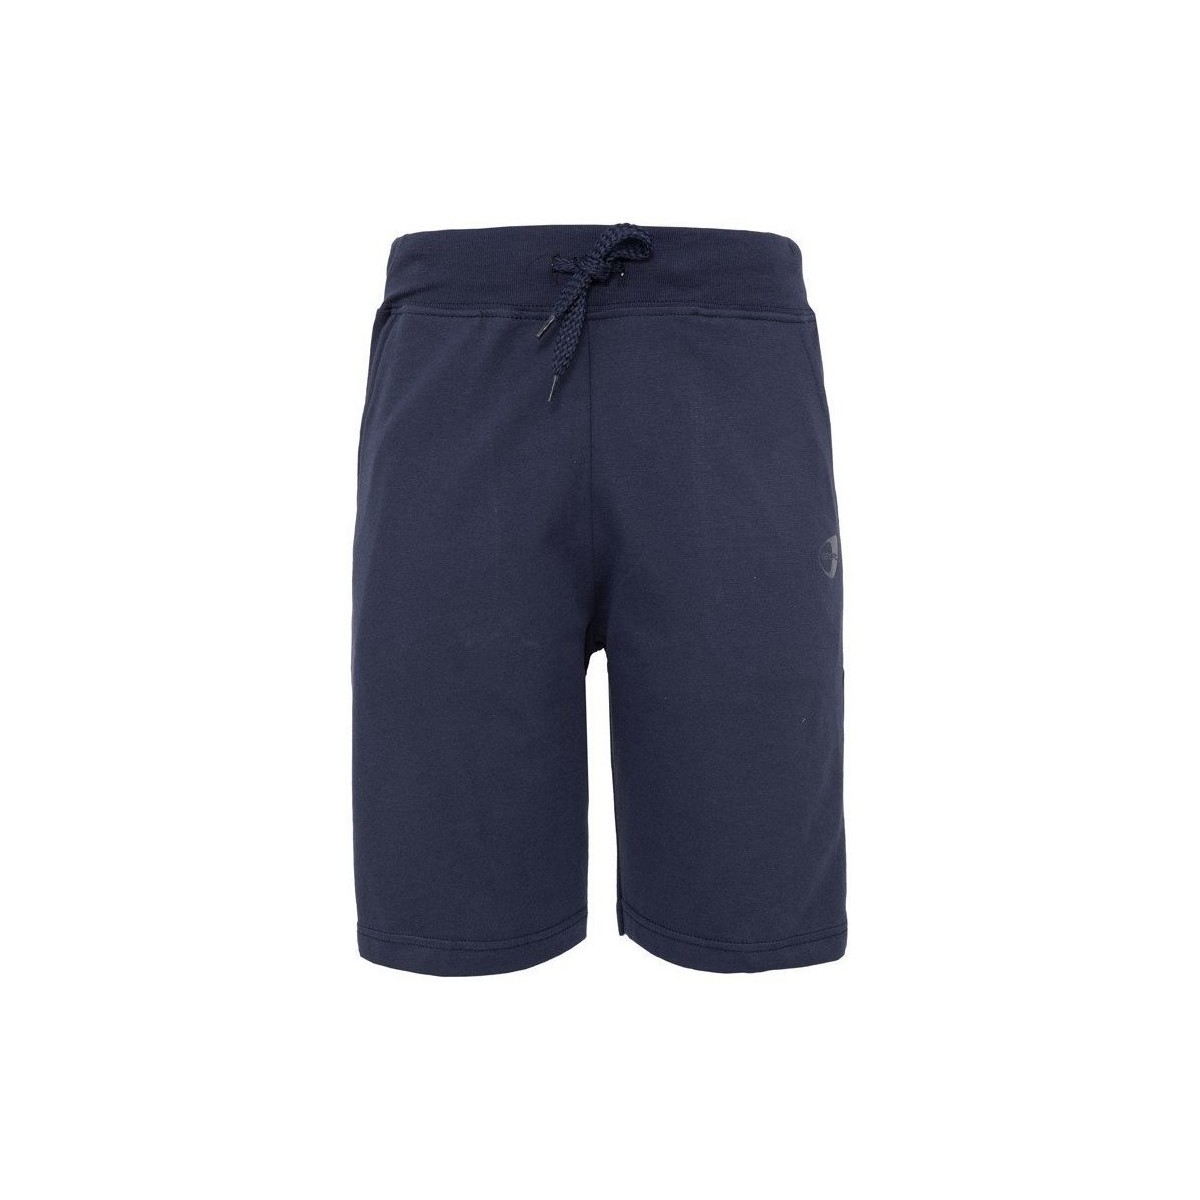 Abbigliamento Unisex bambino Shorts / Bermuda Get Fit Bermuda Bambino Fitenss Blu